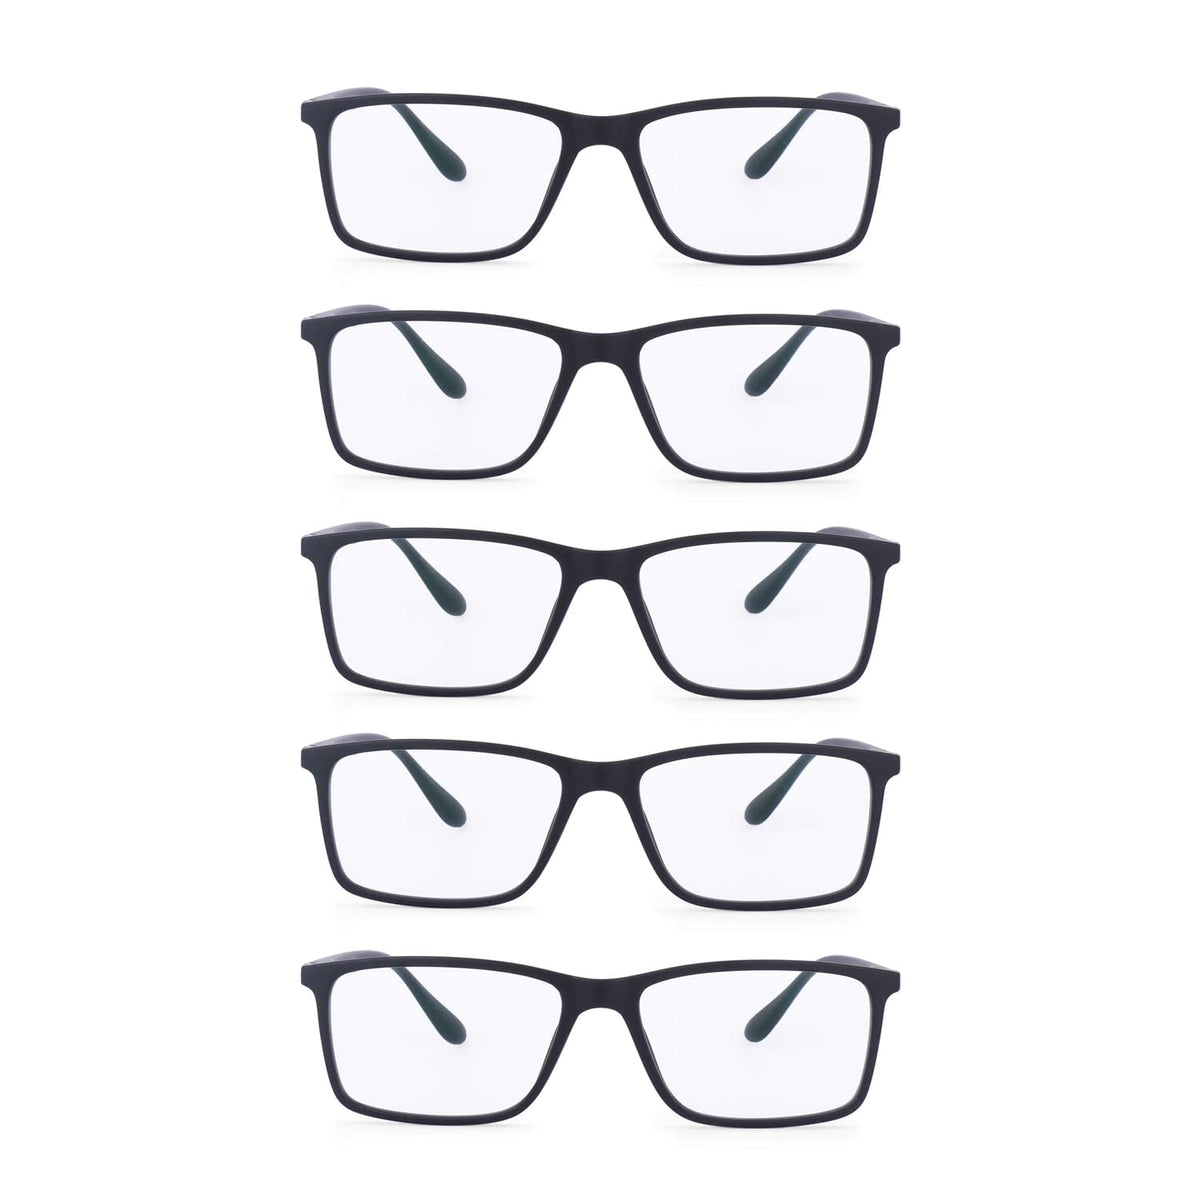 Intellilens® Square Blue Cut Computer Glasses for Eye Protection (Pack Of 5)|Unisex, Zero Power, Anti Glare UV Protection Specs TR90 Frames & CR39 Blue Cut Lenses (Black) (52-17-138)